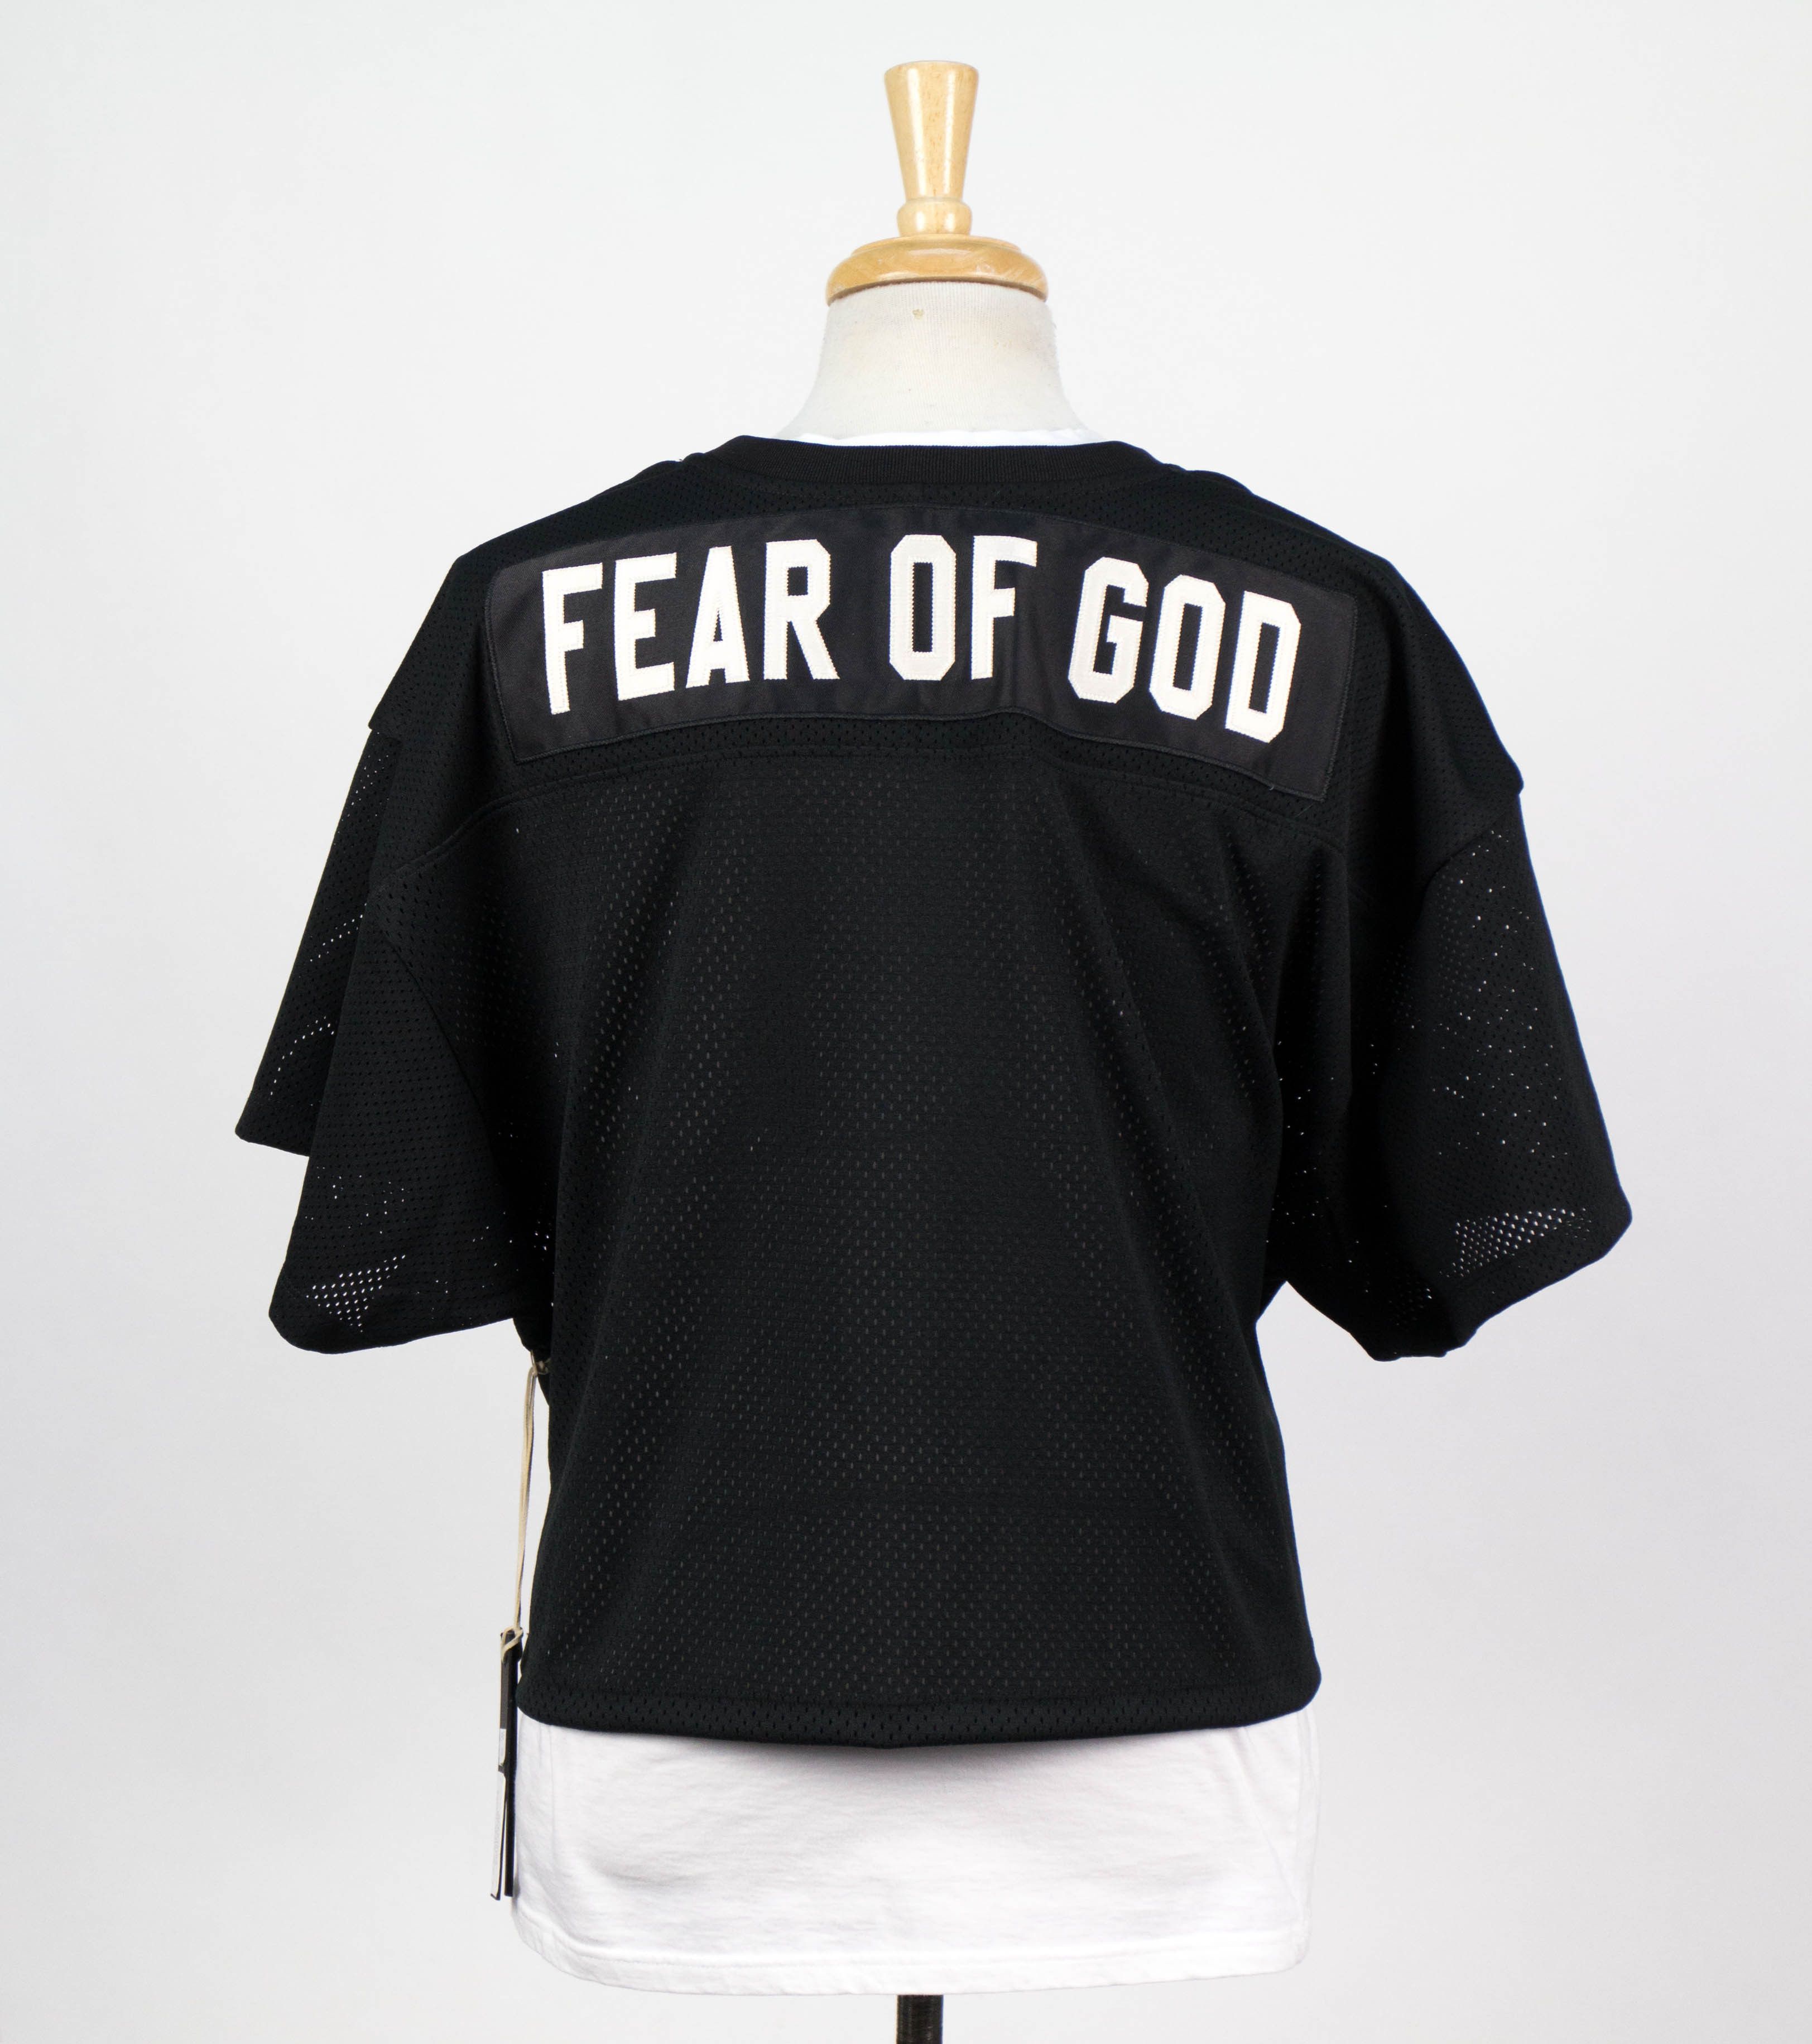 FEAR OF GOD MESH FOOTBALL JERSEY / SM